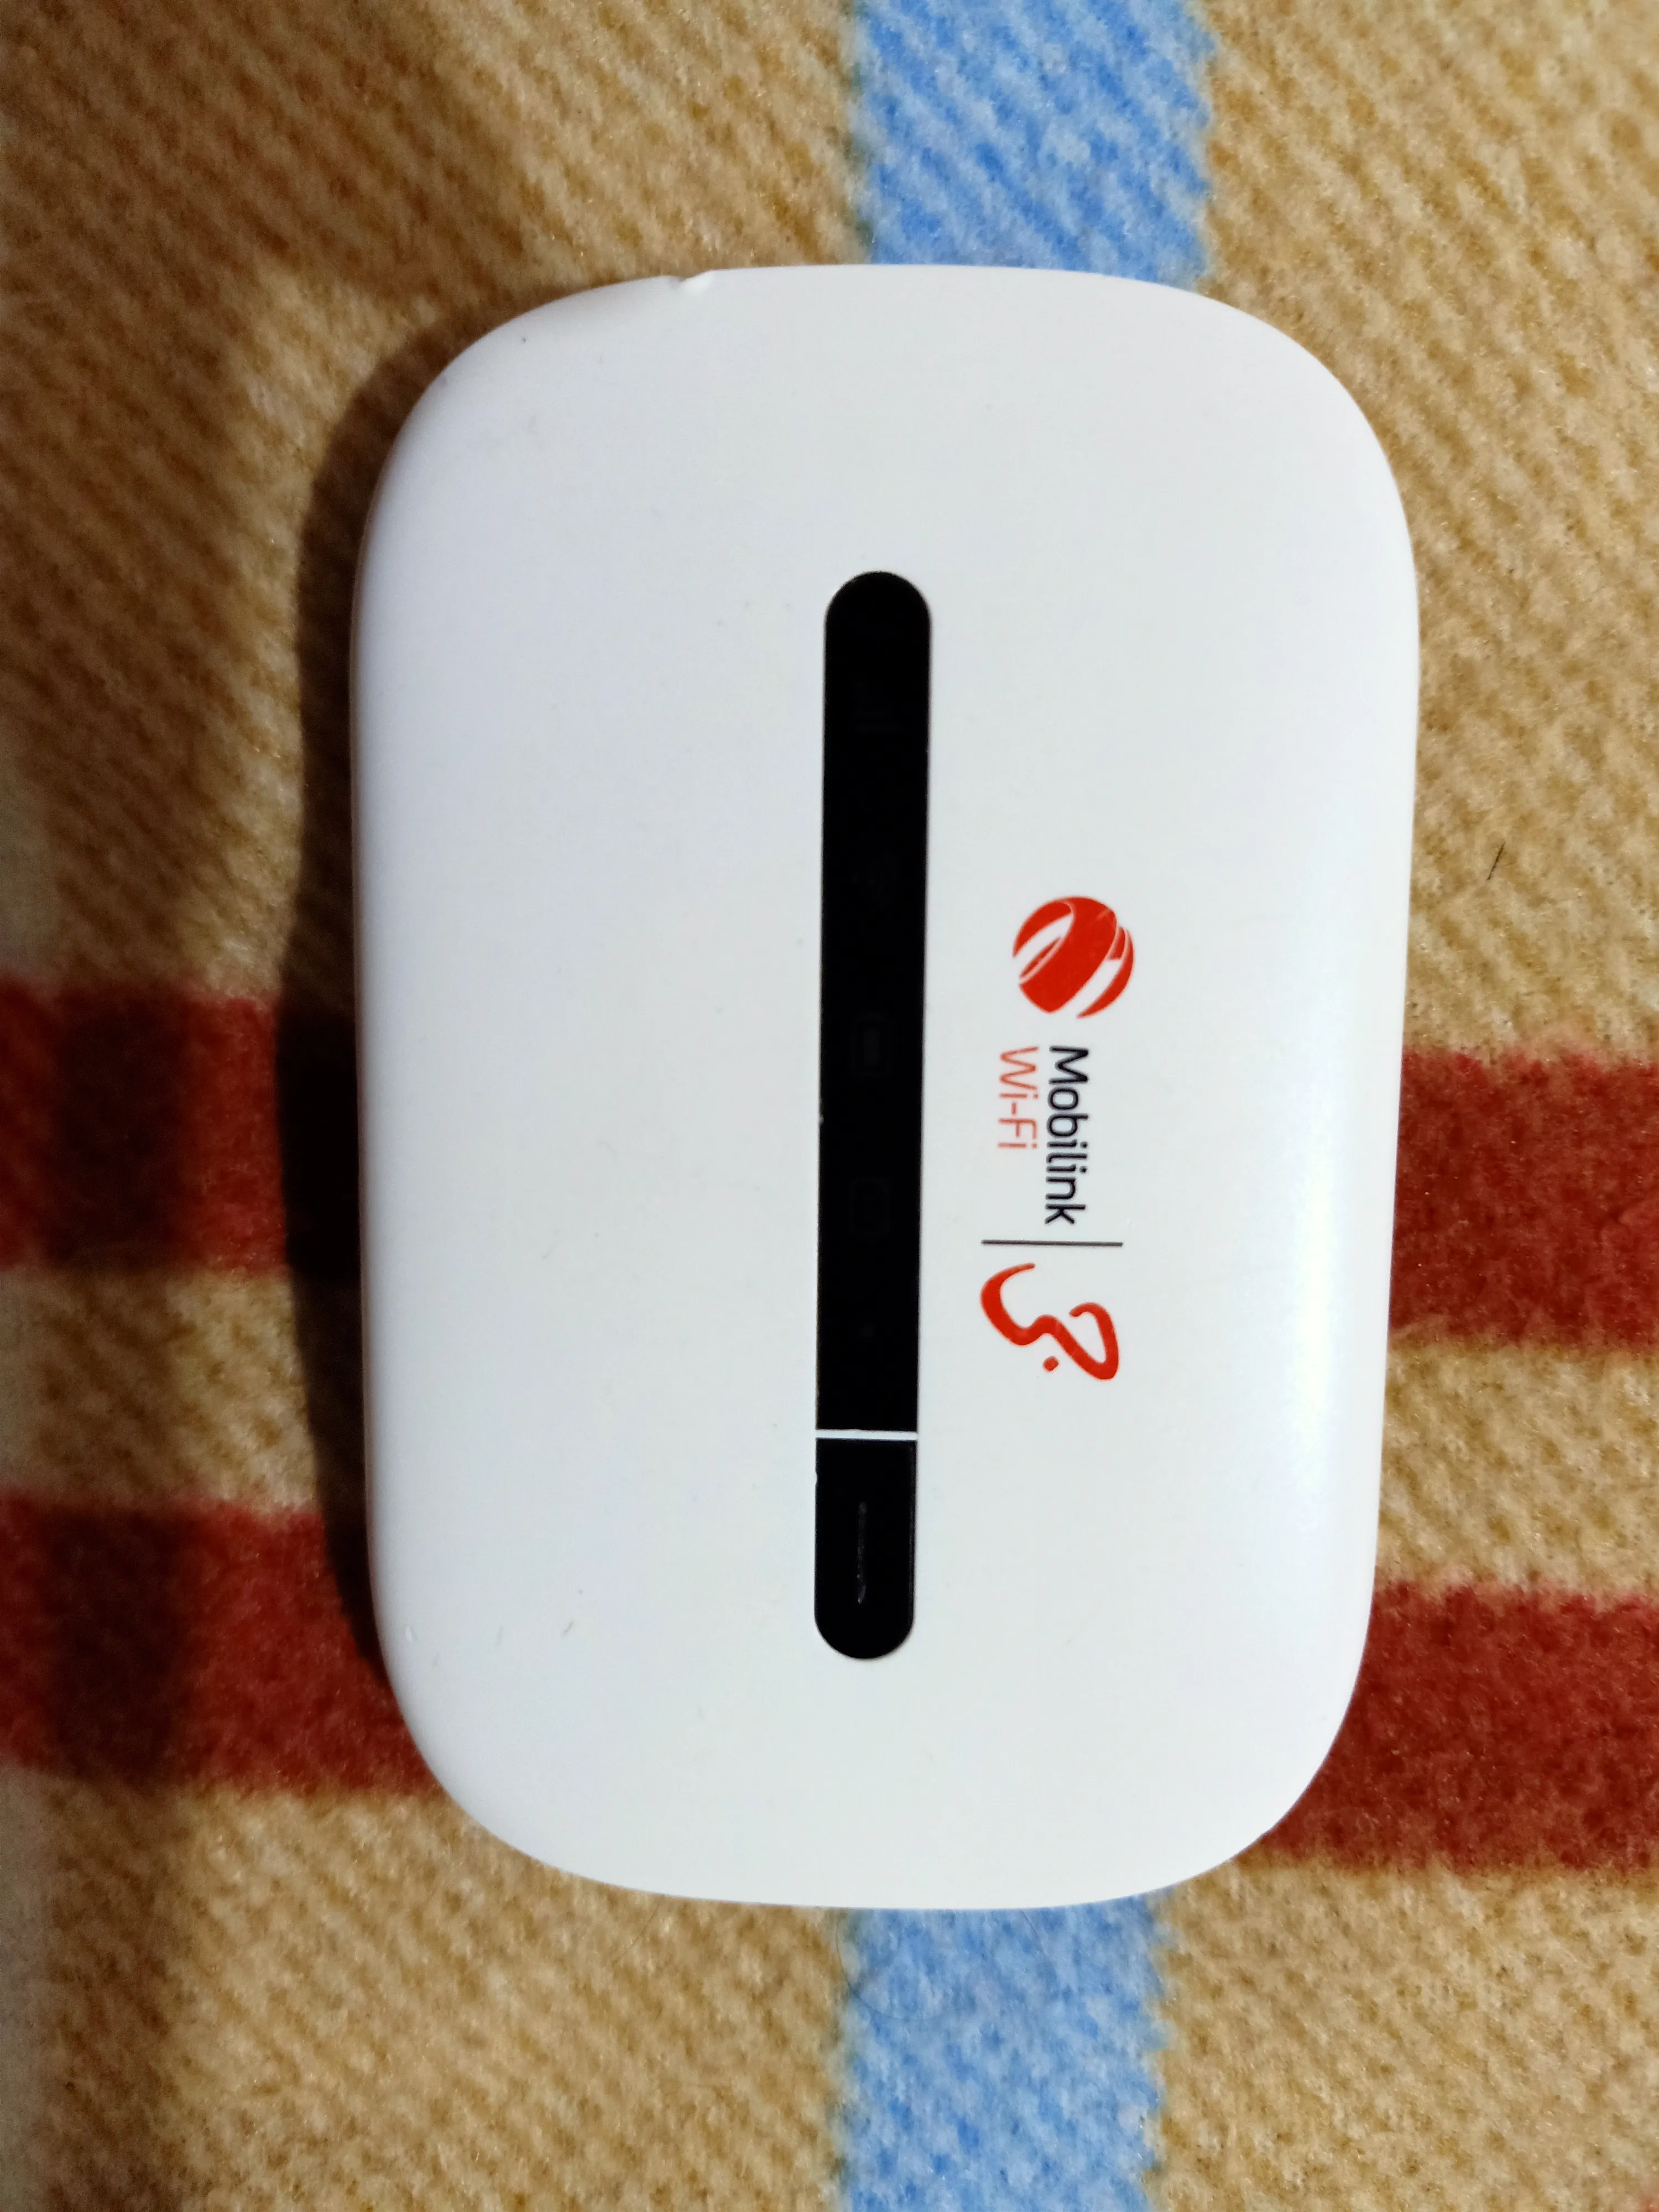 mobilink 3G wifi device ( unlocked) - photo 1